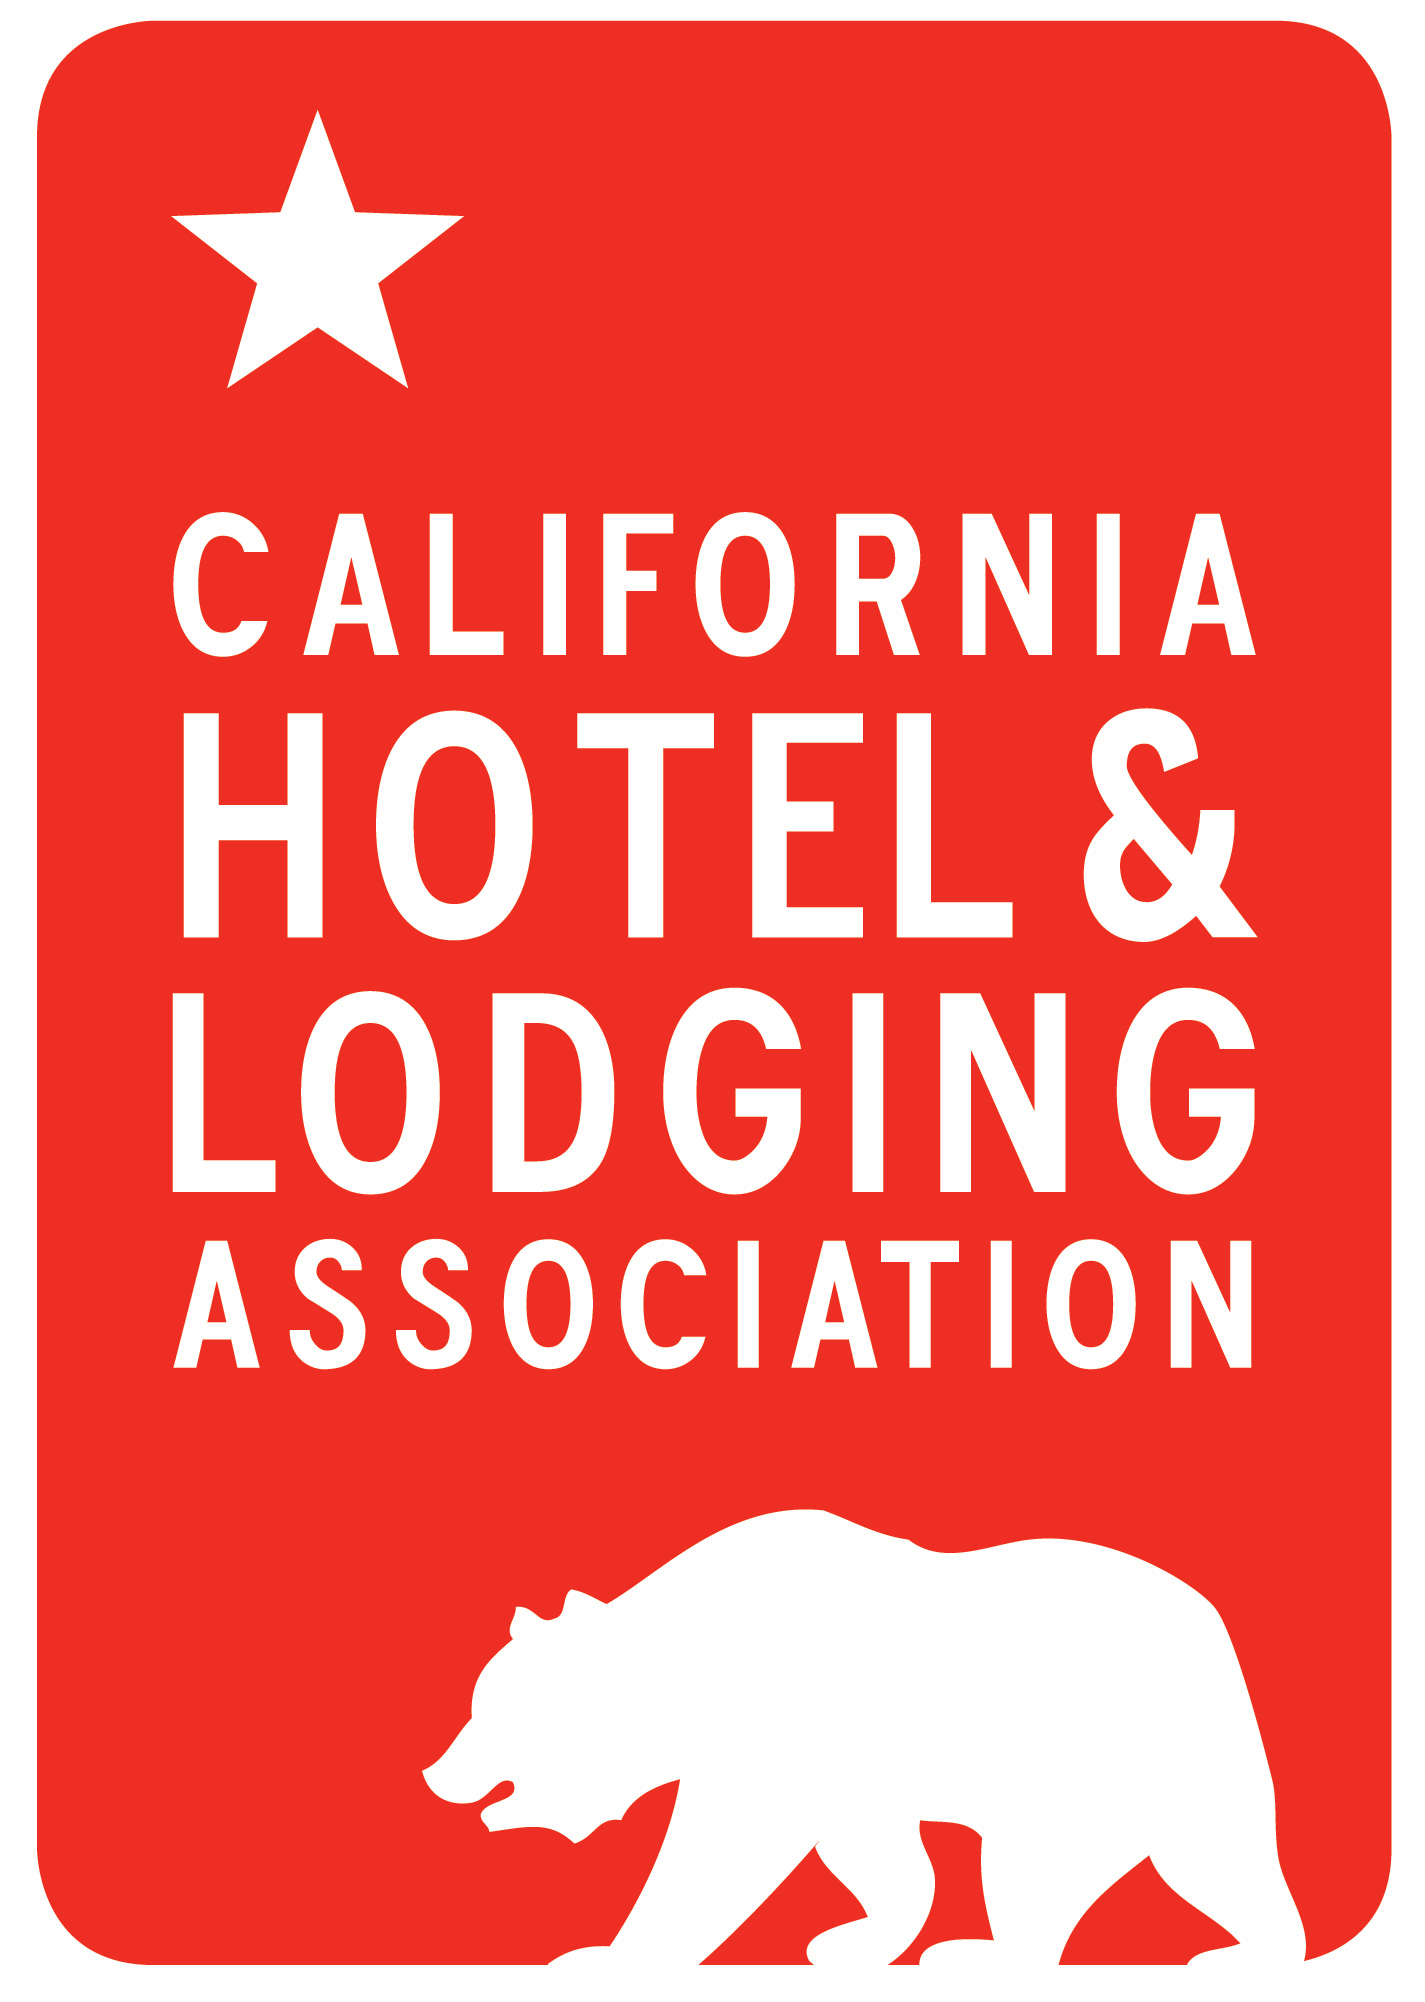  California Hotel & Lodging Association